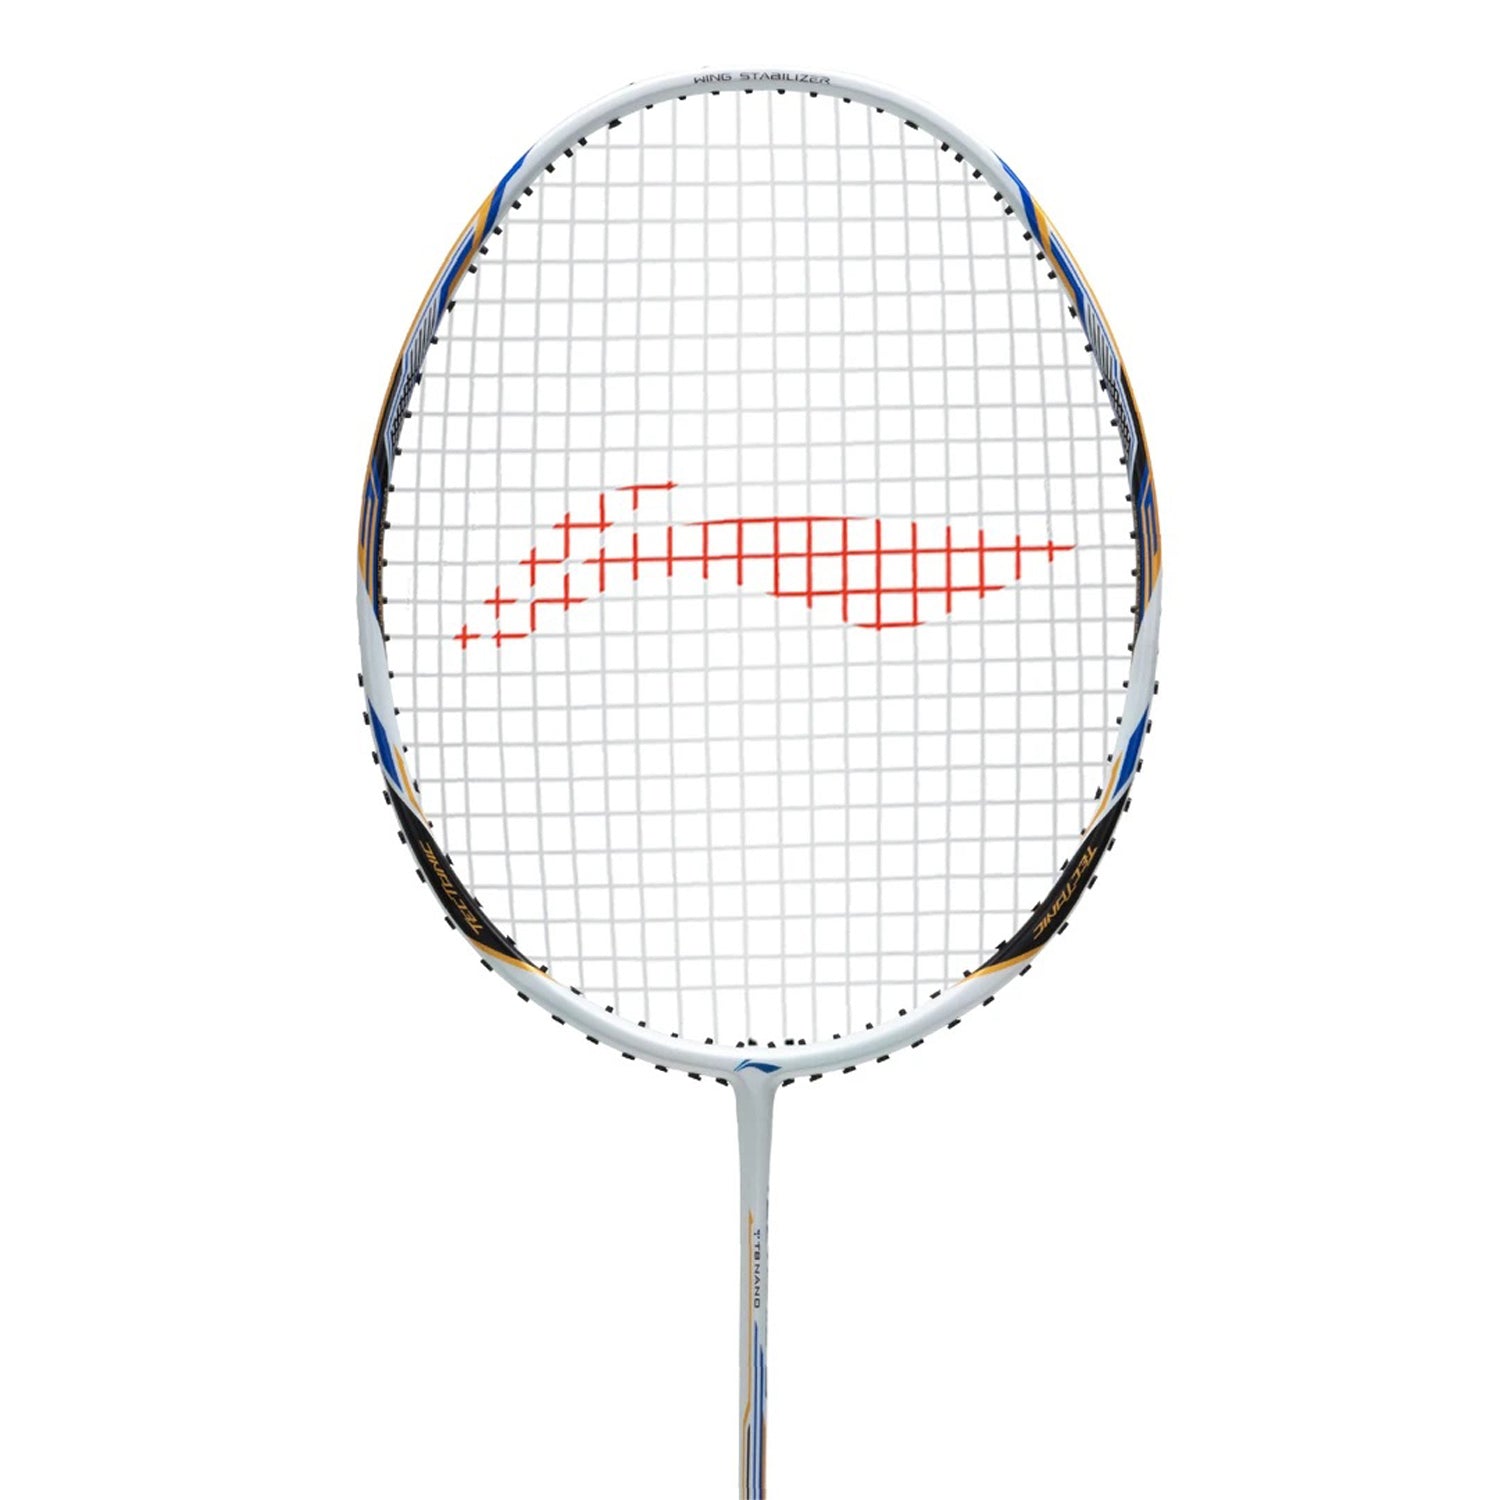 Li-Ning Tectonic 3 R-Series Strung Badminton Racket, White/Gold/Blue (4UIG6) - Best Price online Prokicksports.com